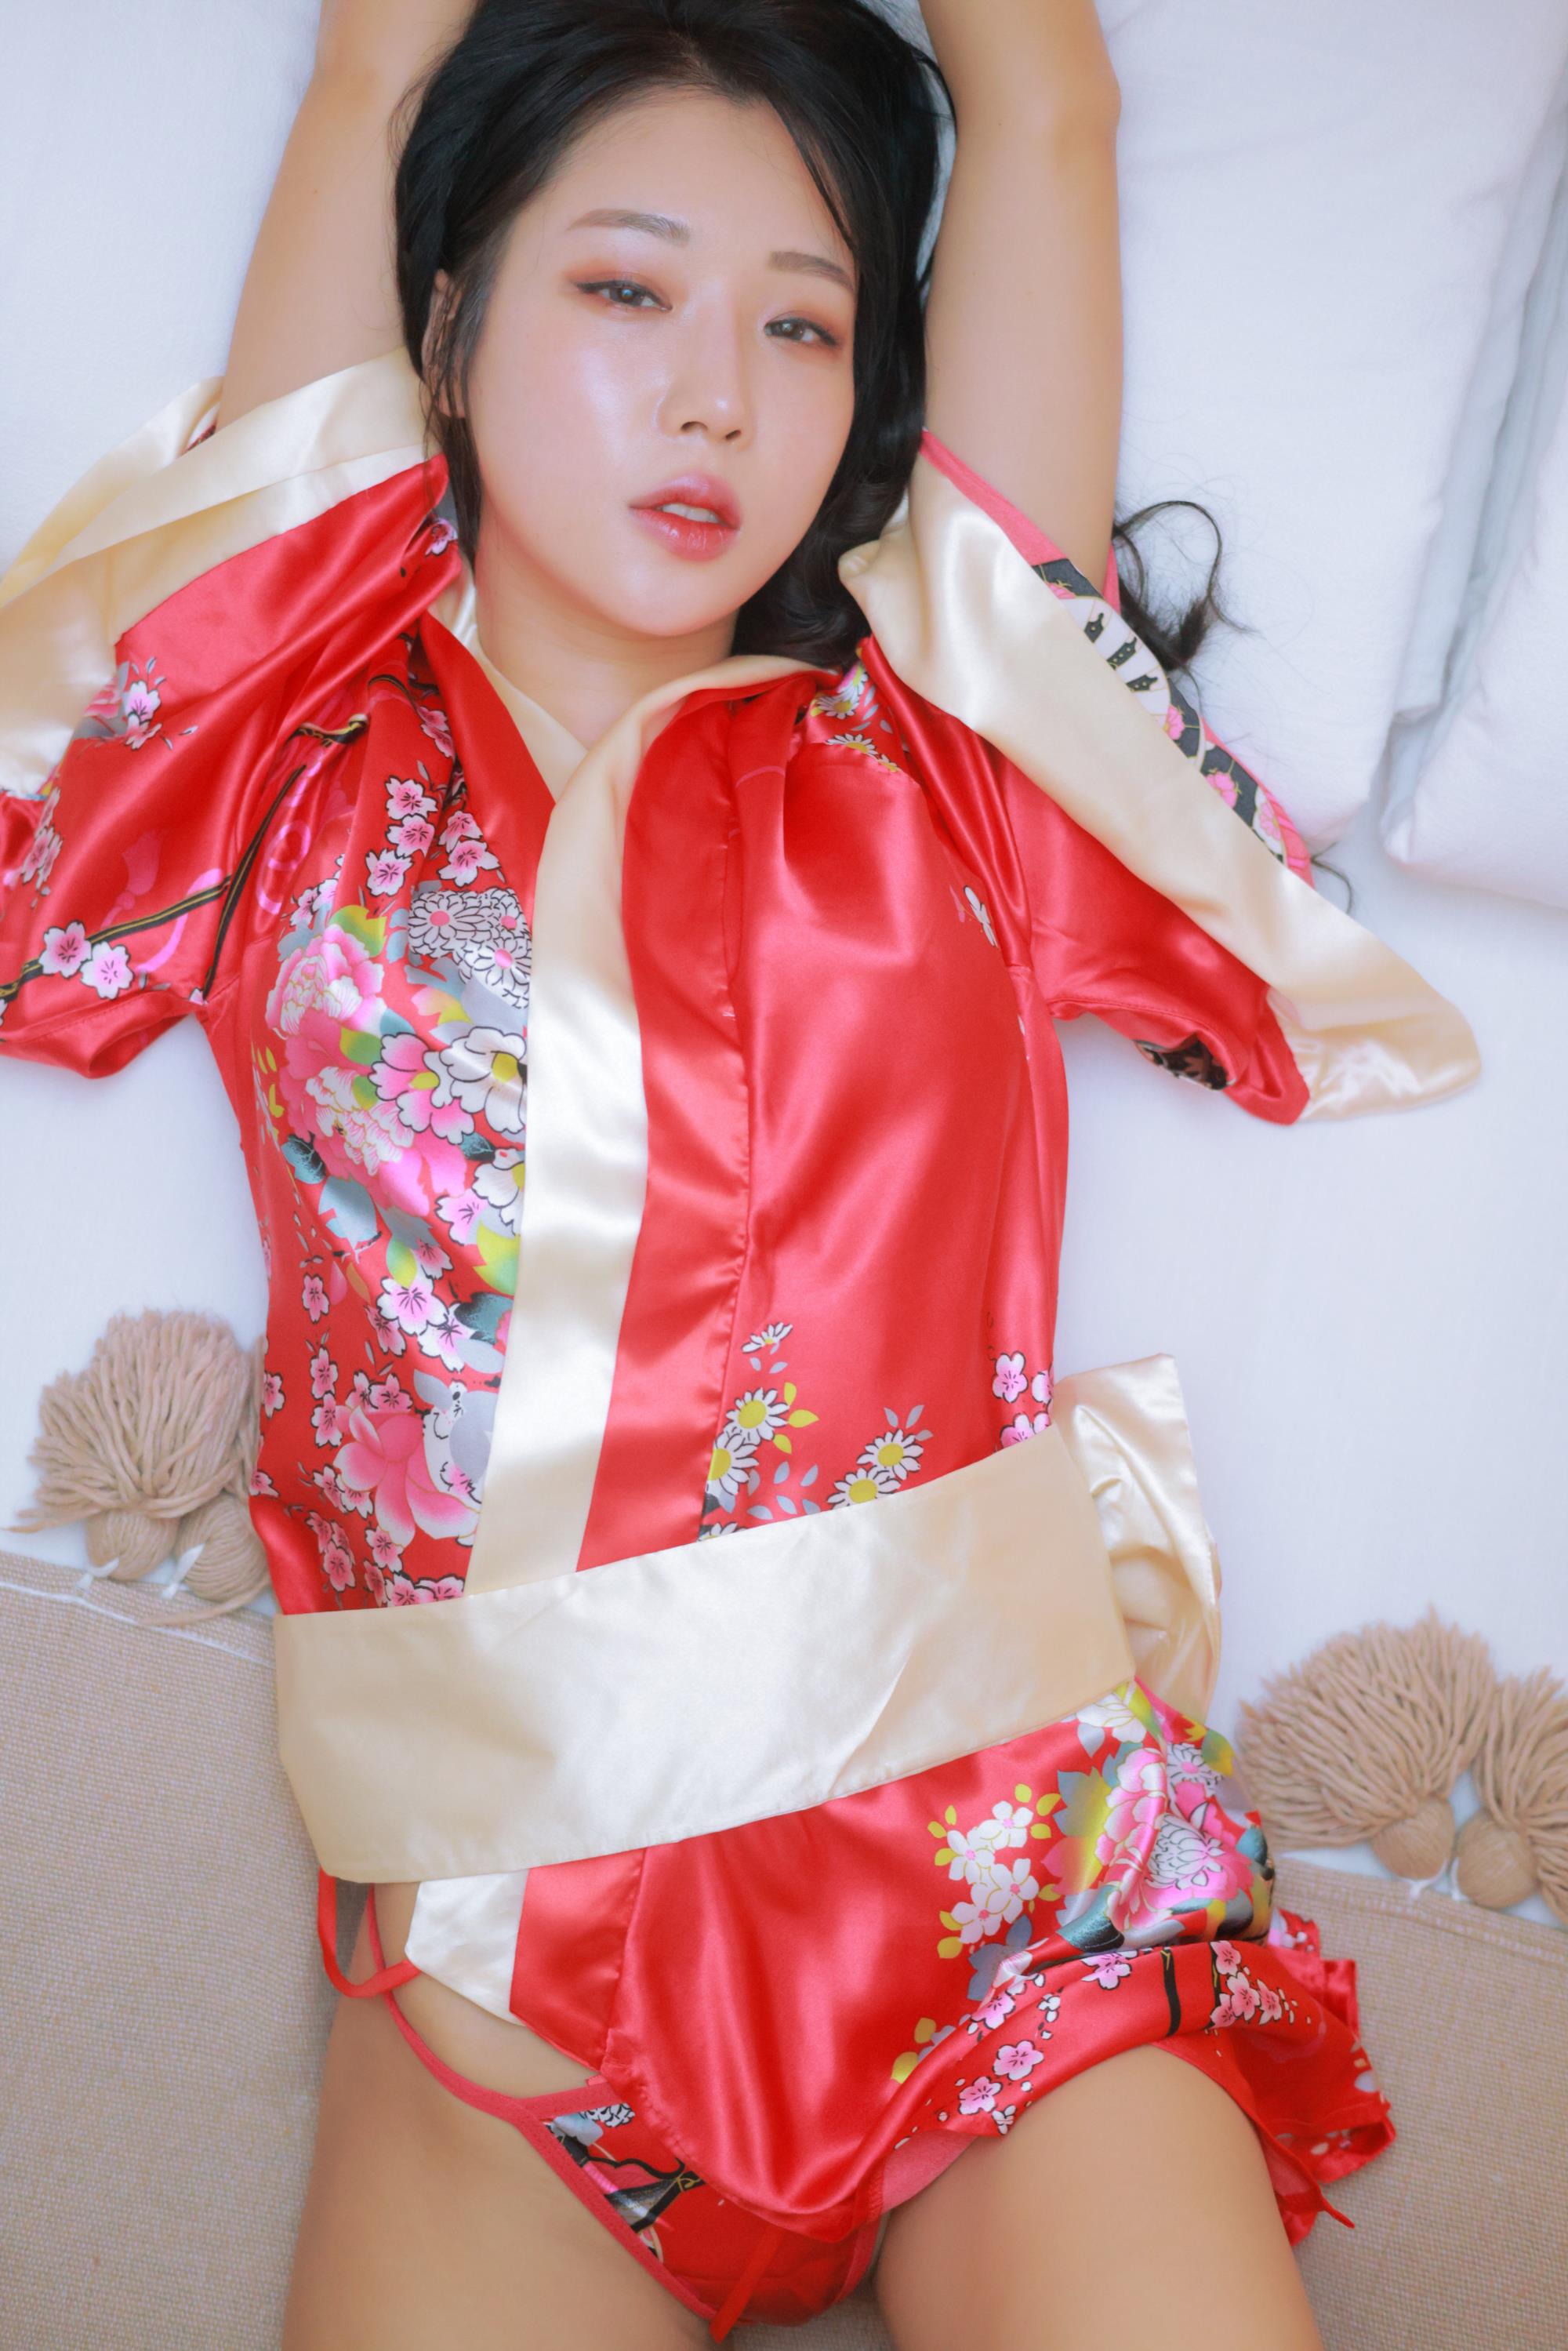 Coco6st Miss Maxim KR Sumin Blossom - 49.jpg